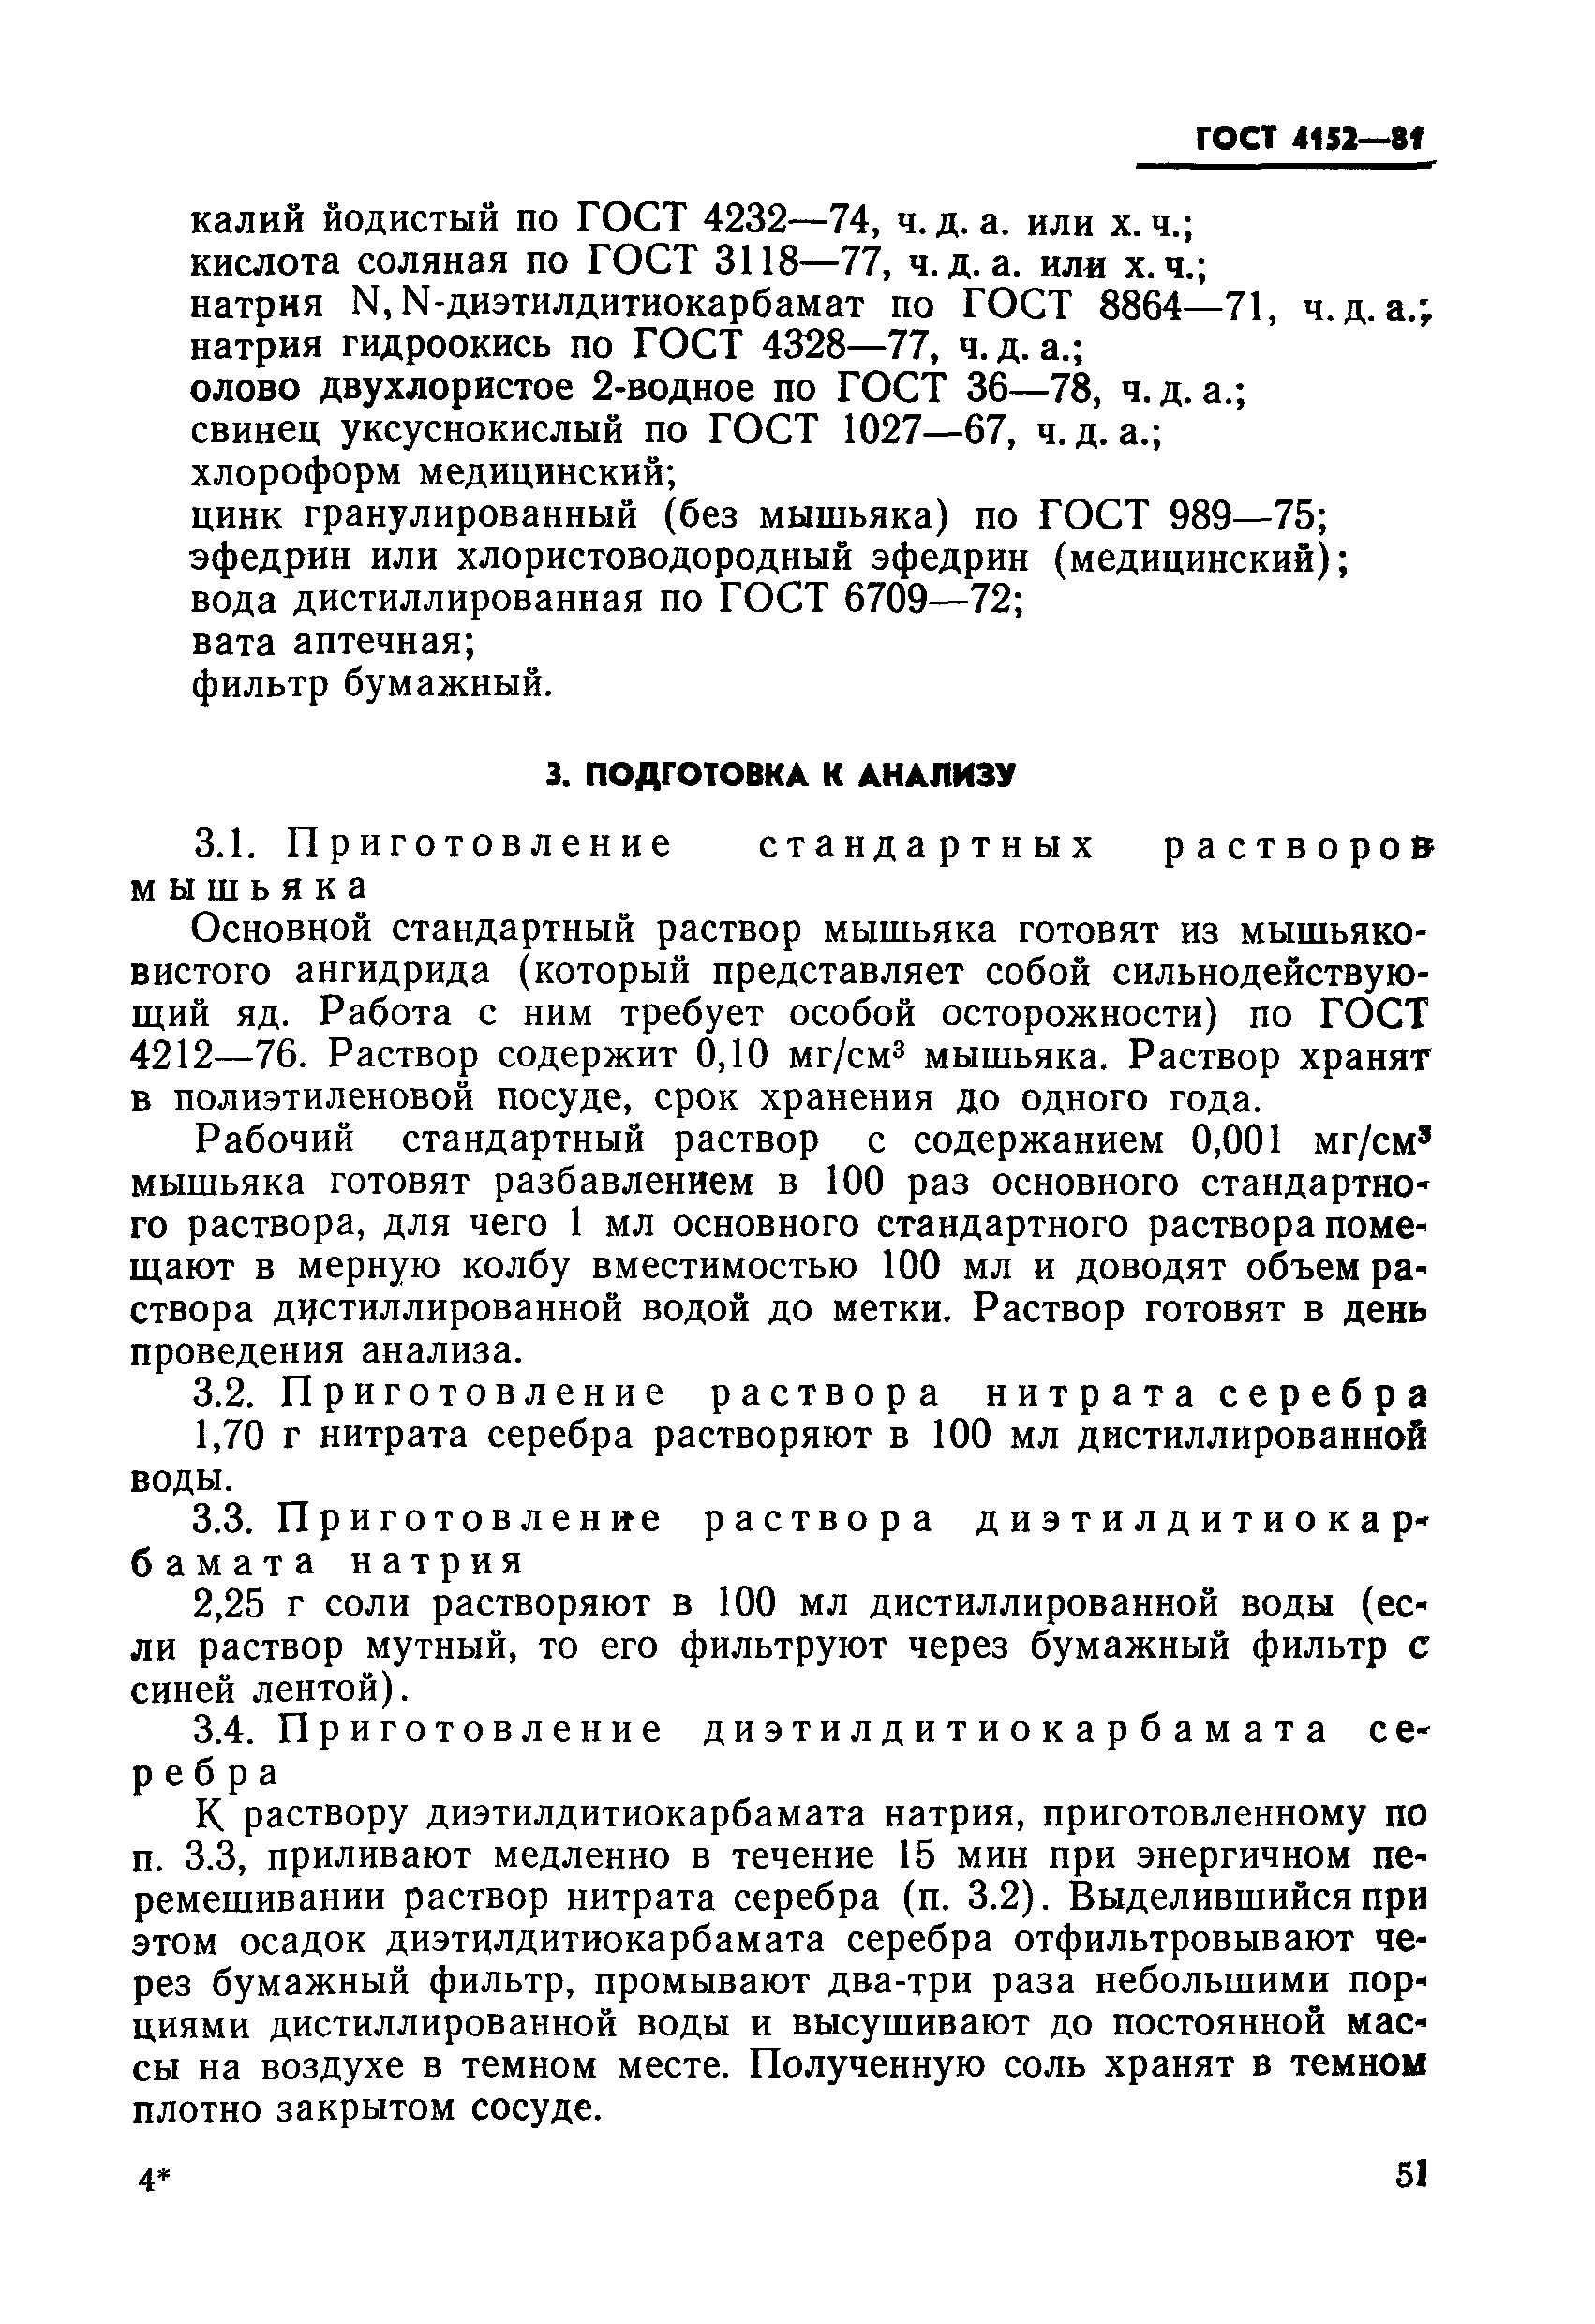 ГОСТ 4152-81